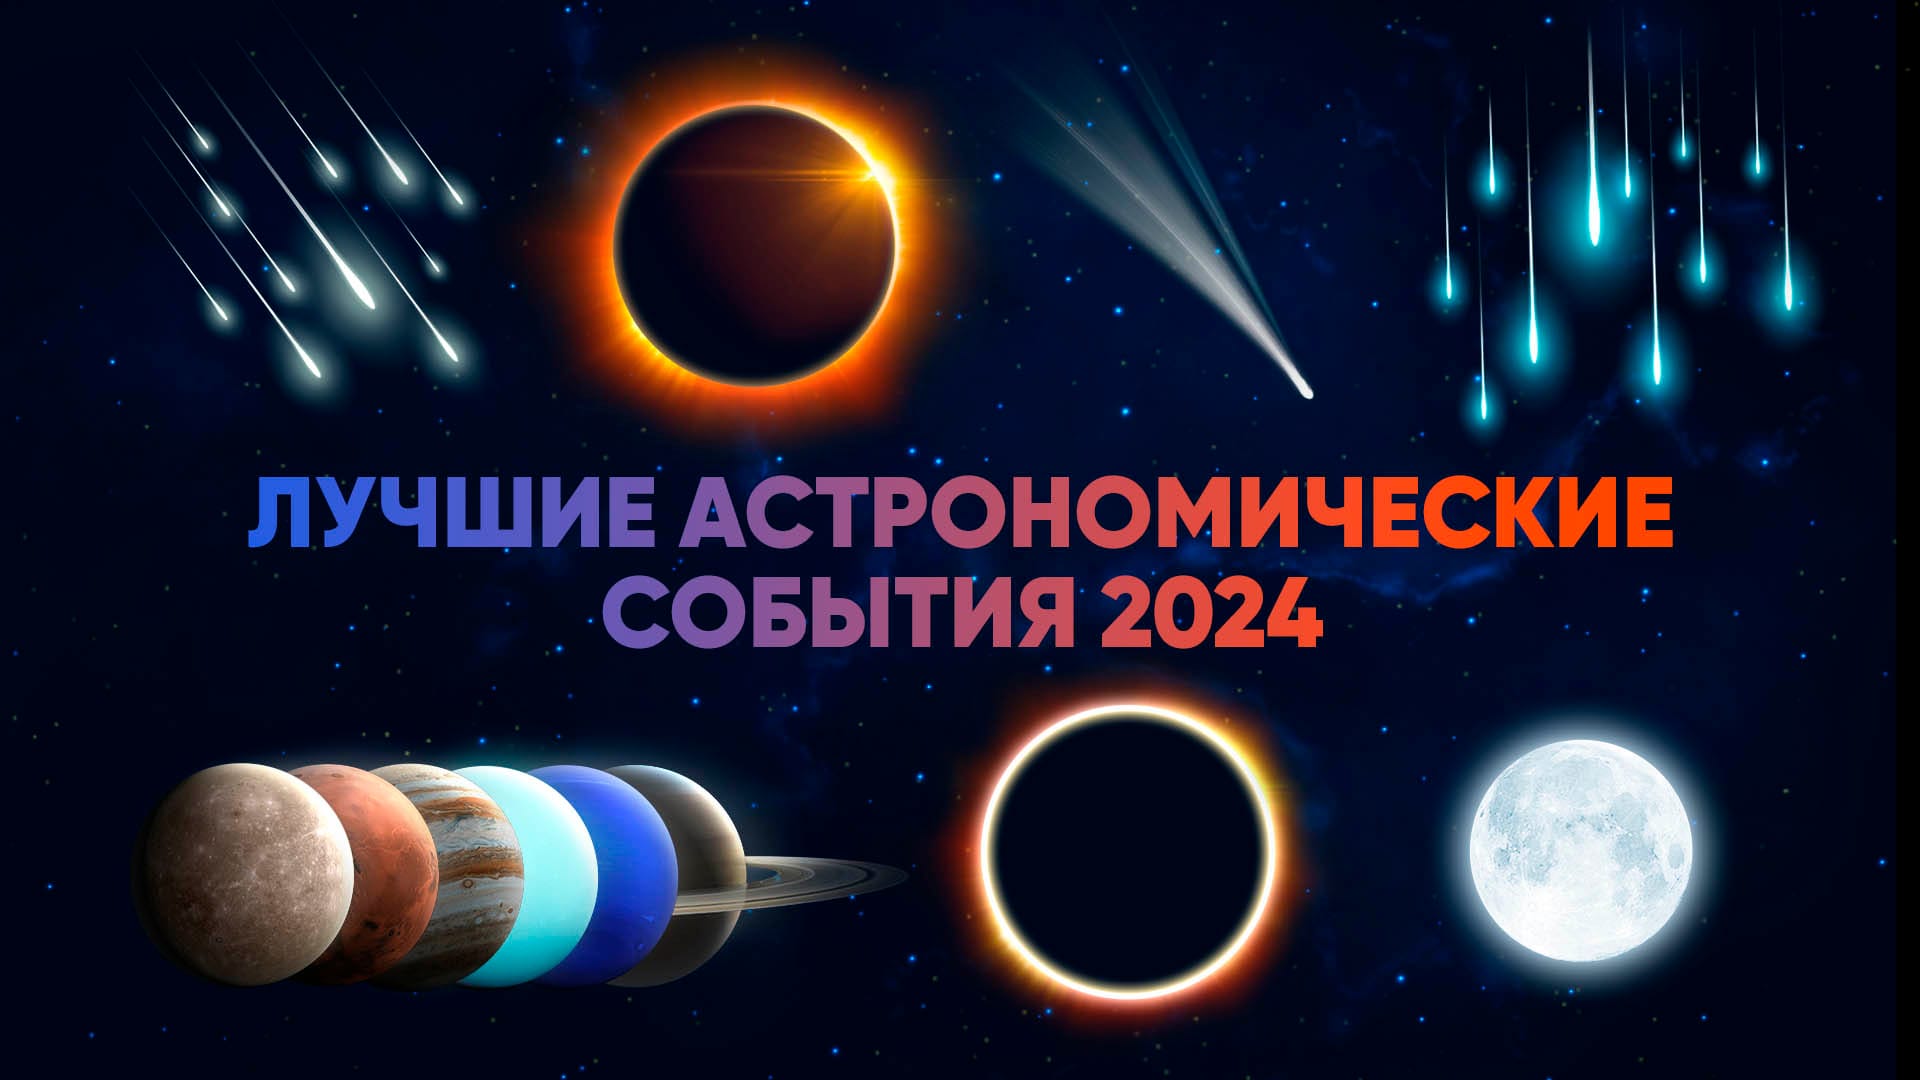 Best astronomical events 2024